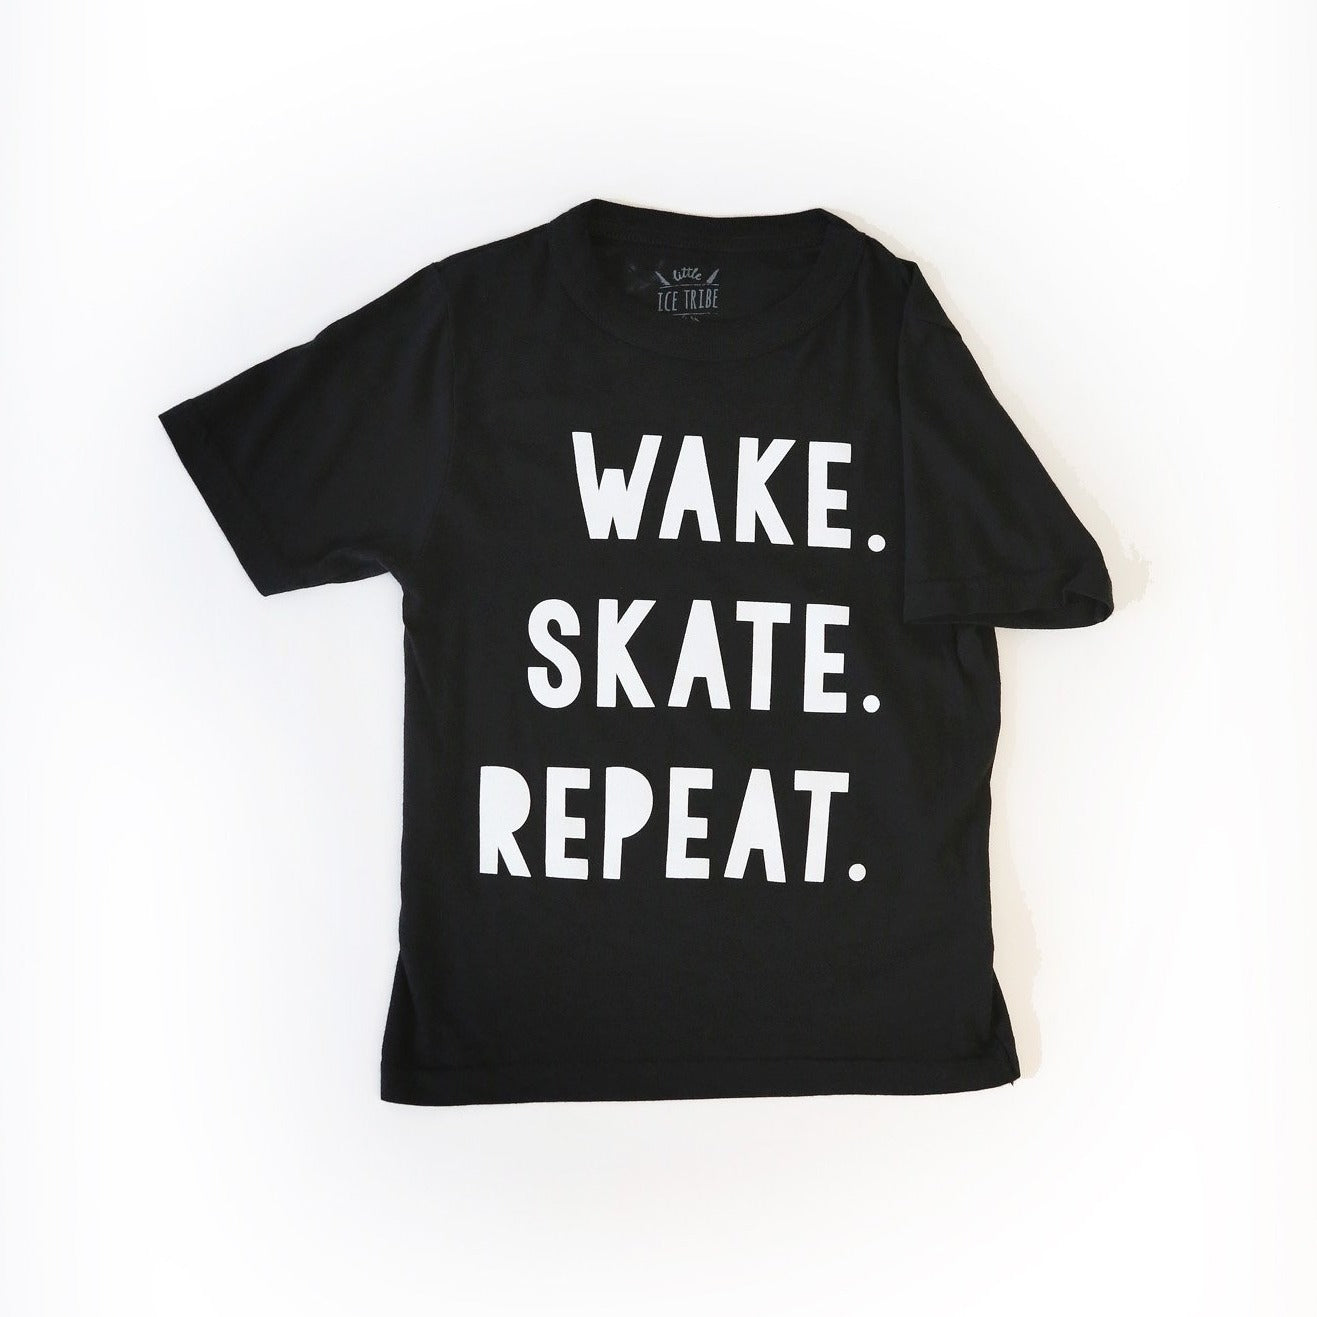 Wake. Skate. Repeat. Kid's Tee